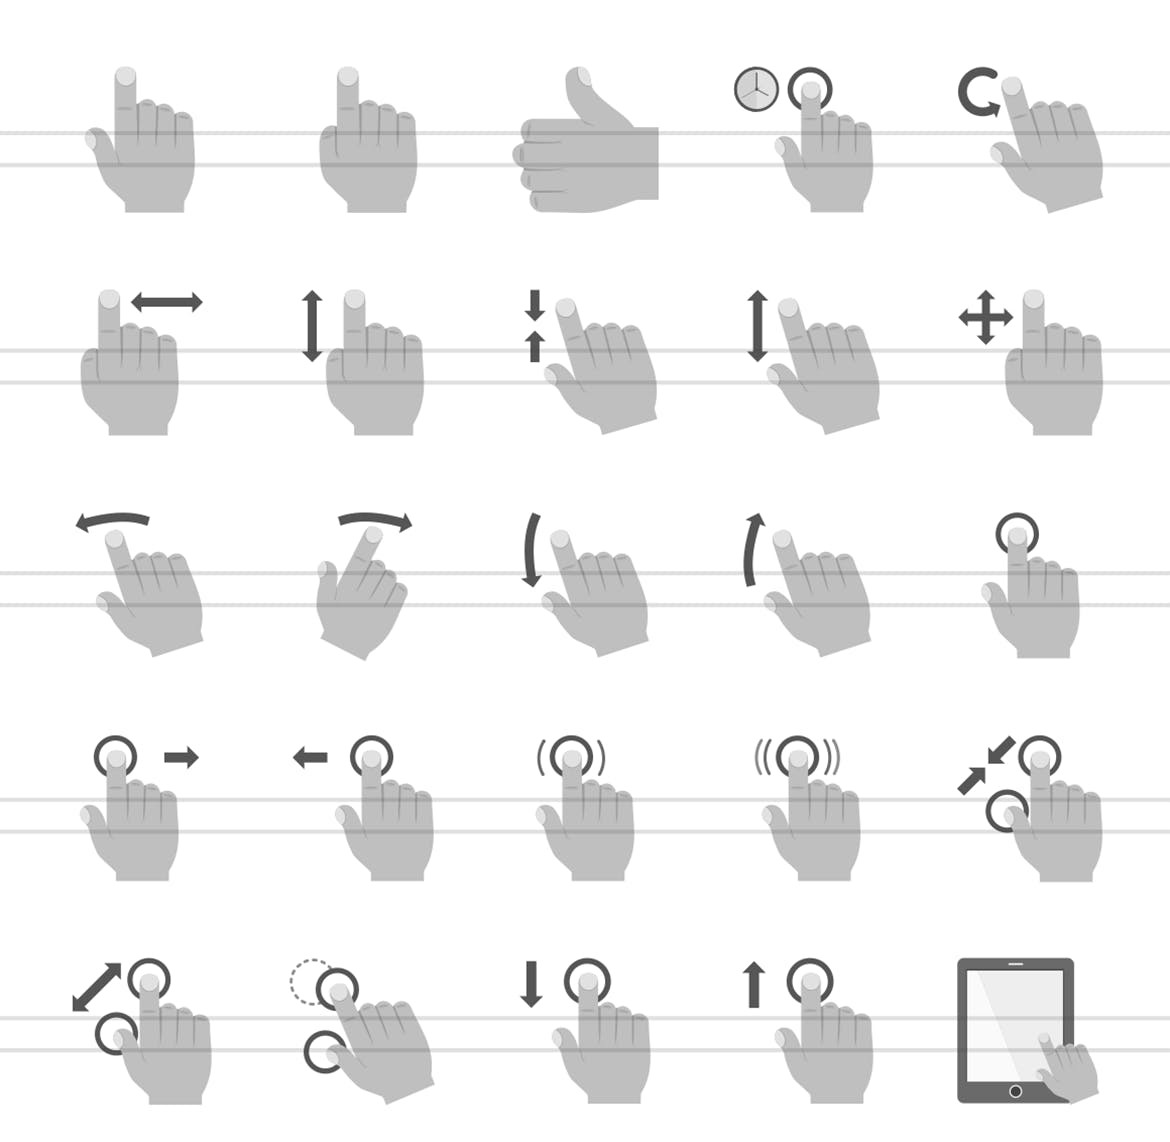 50枚手机触摸手势动作图标素材 50 Touch Gestures Greyscale Icons插图(1)